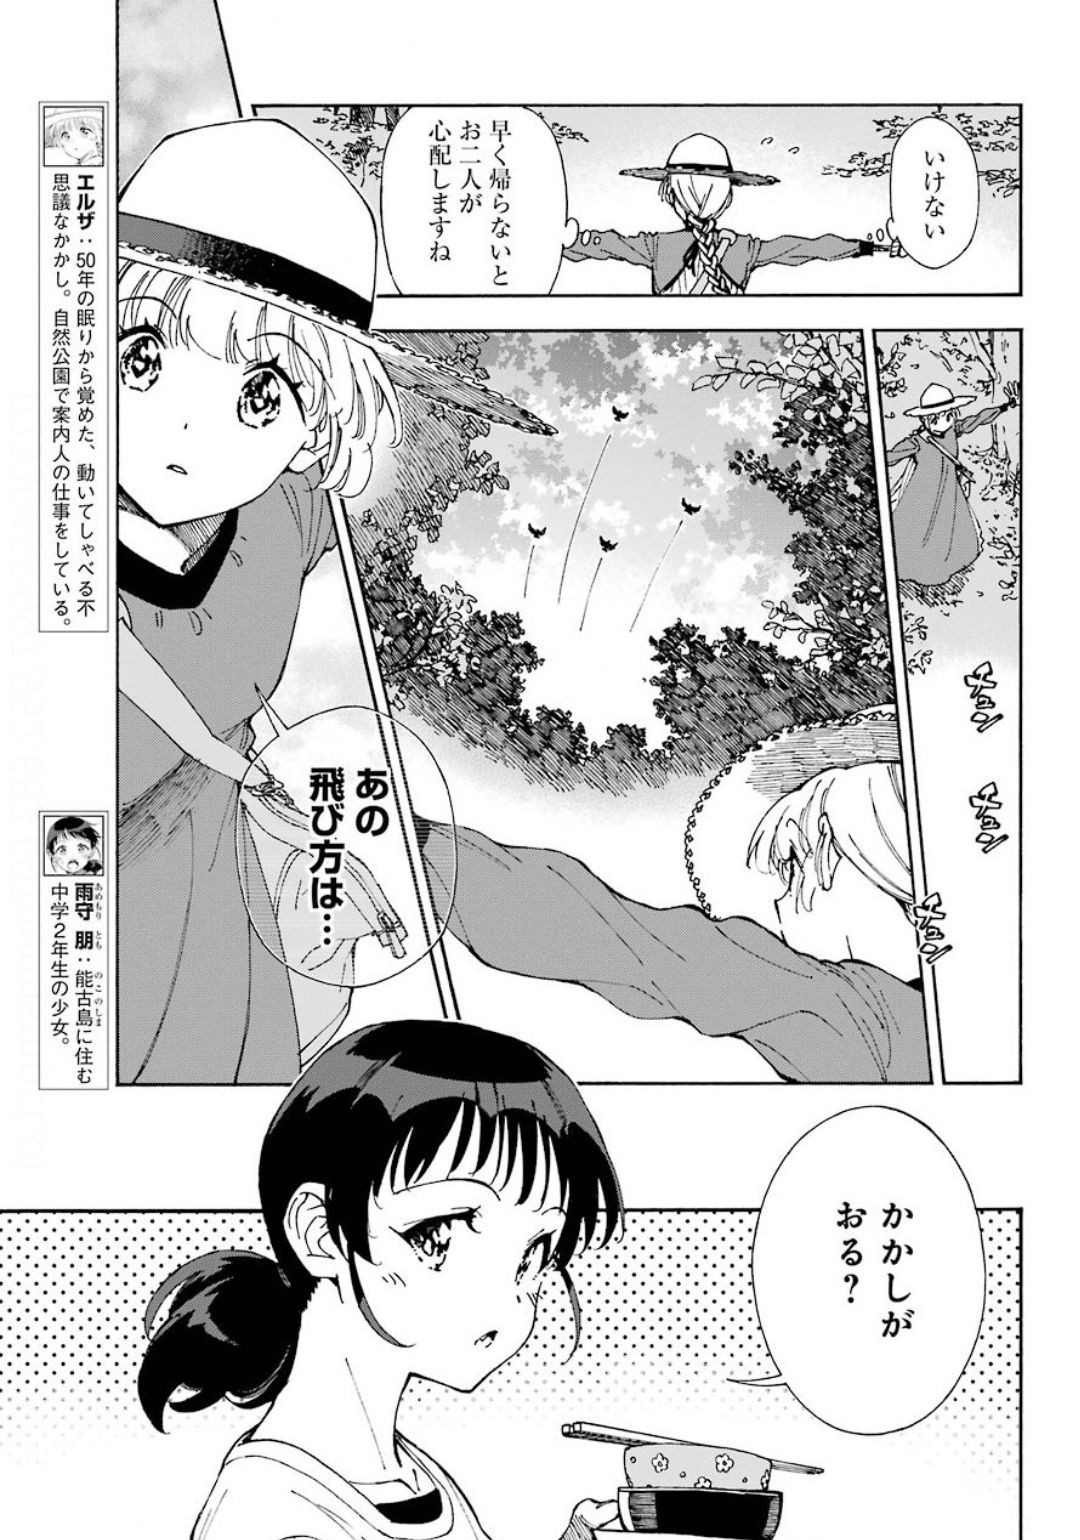 Hotomeku-kakashi - Chapter 06-1 - Page 3